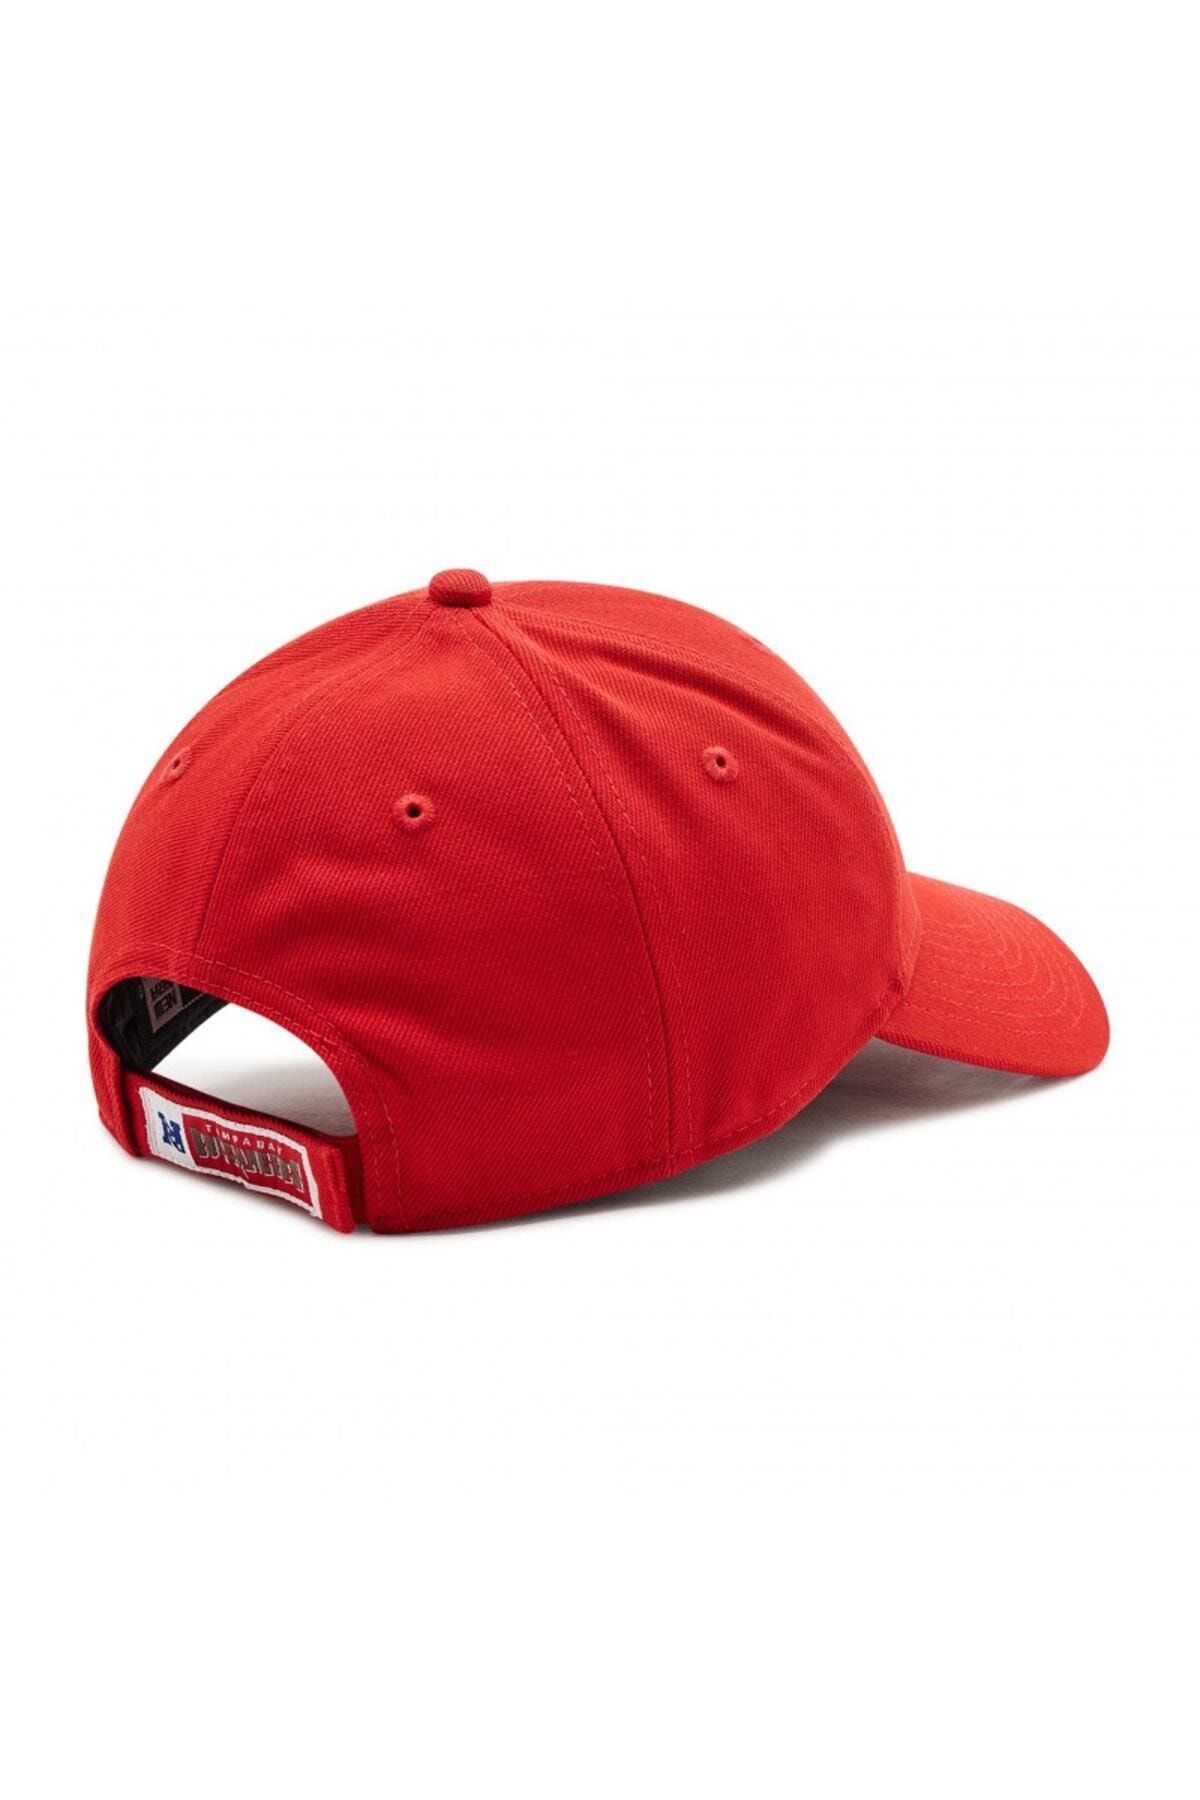 NEW ERA The League Tambuc 2020 OTC یونیسکس Red Hat 12494445-940